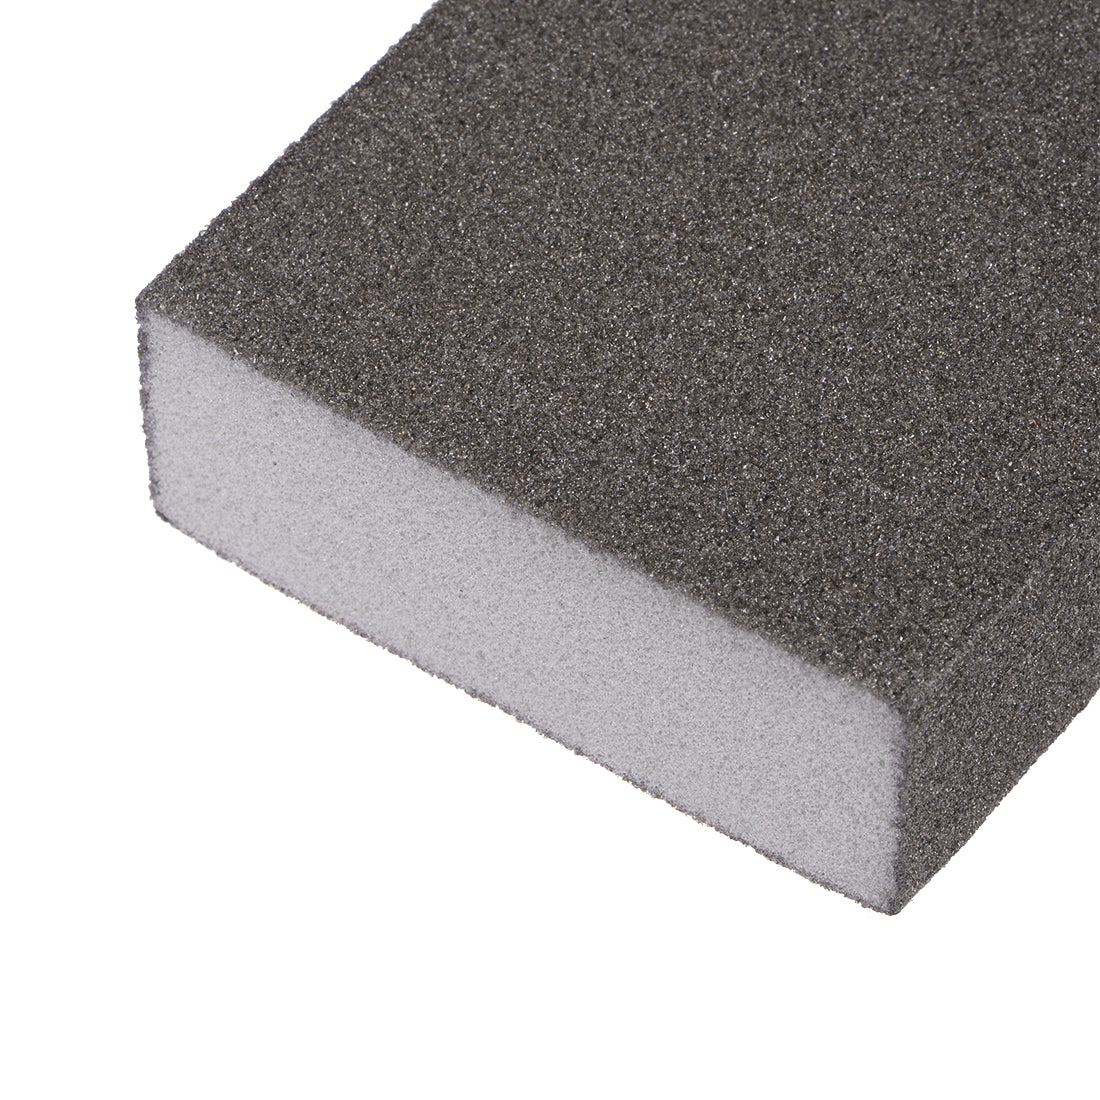 uxcell Uxcell Sanding Sponge Block, 240-320 Grit, 100mm x 70mm x 25mm